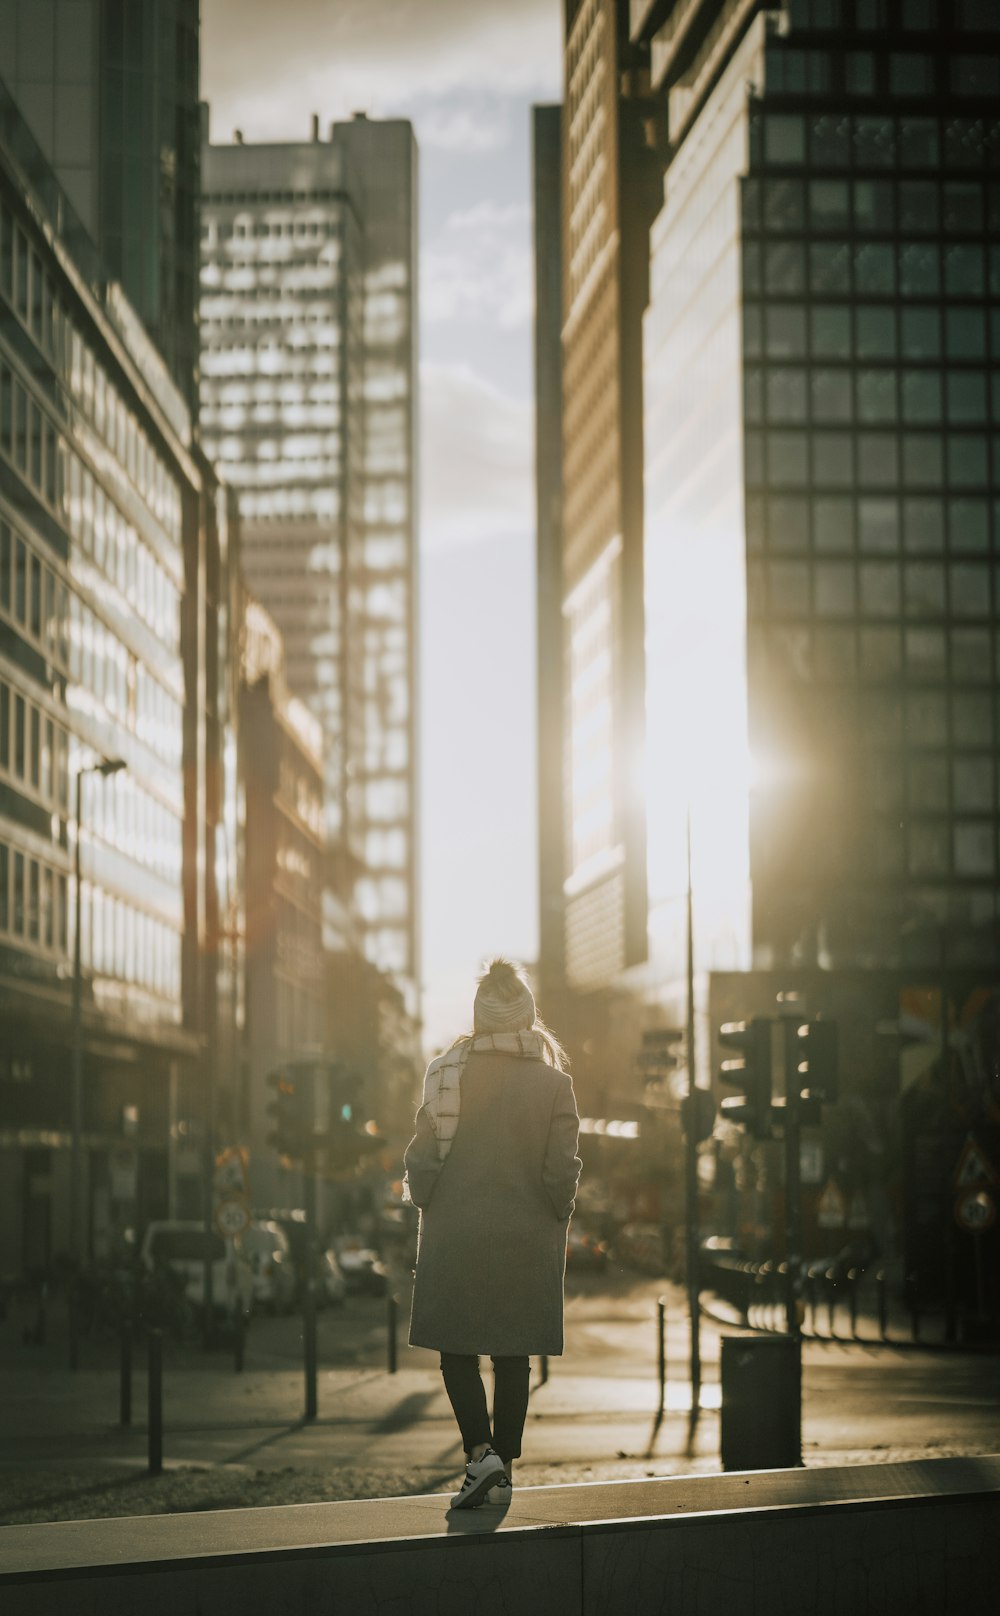 a person walking down a sidewalk in a city